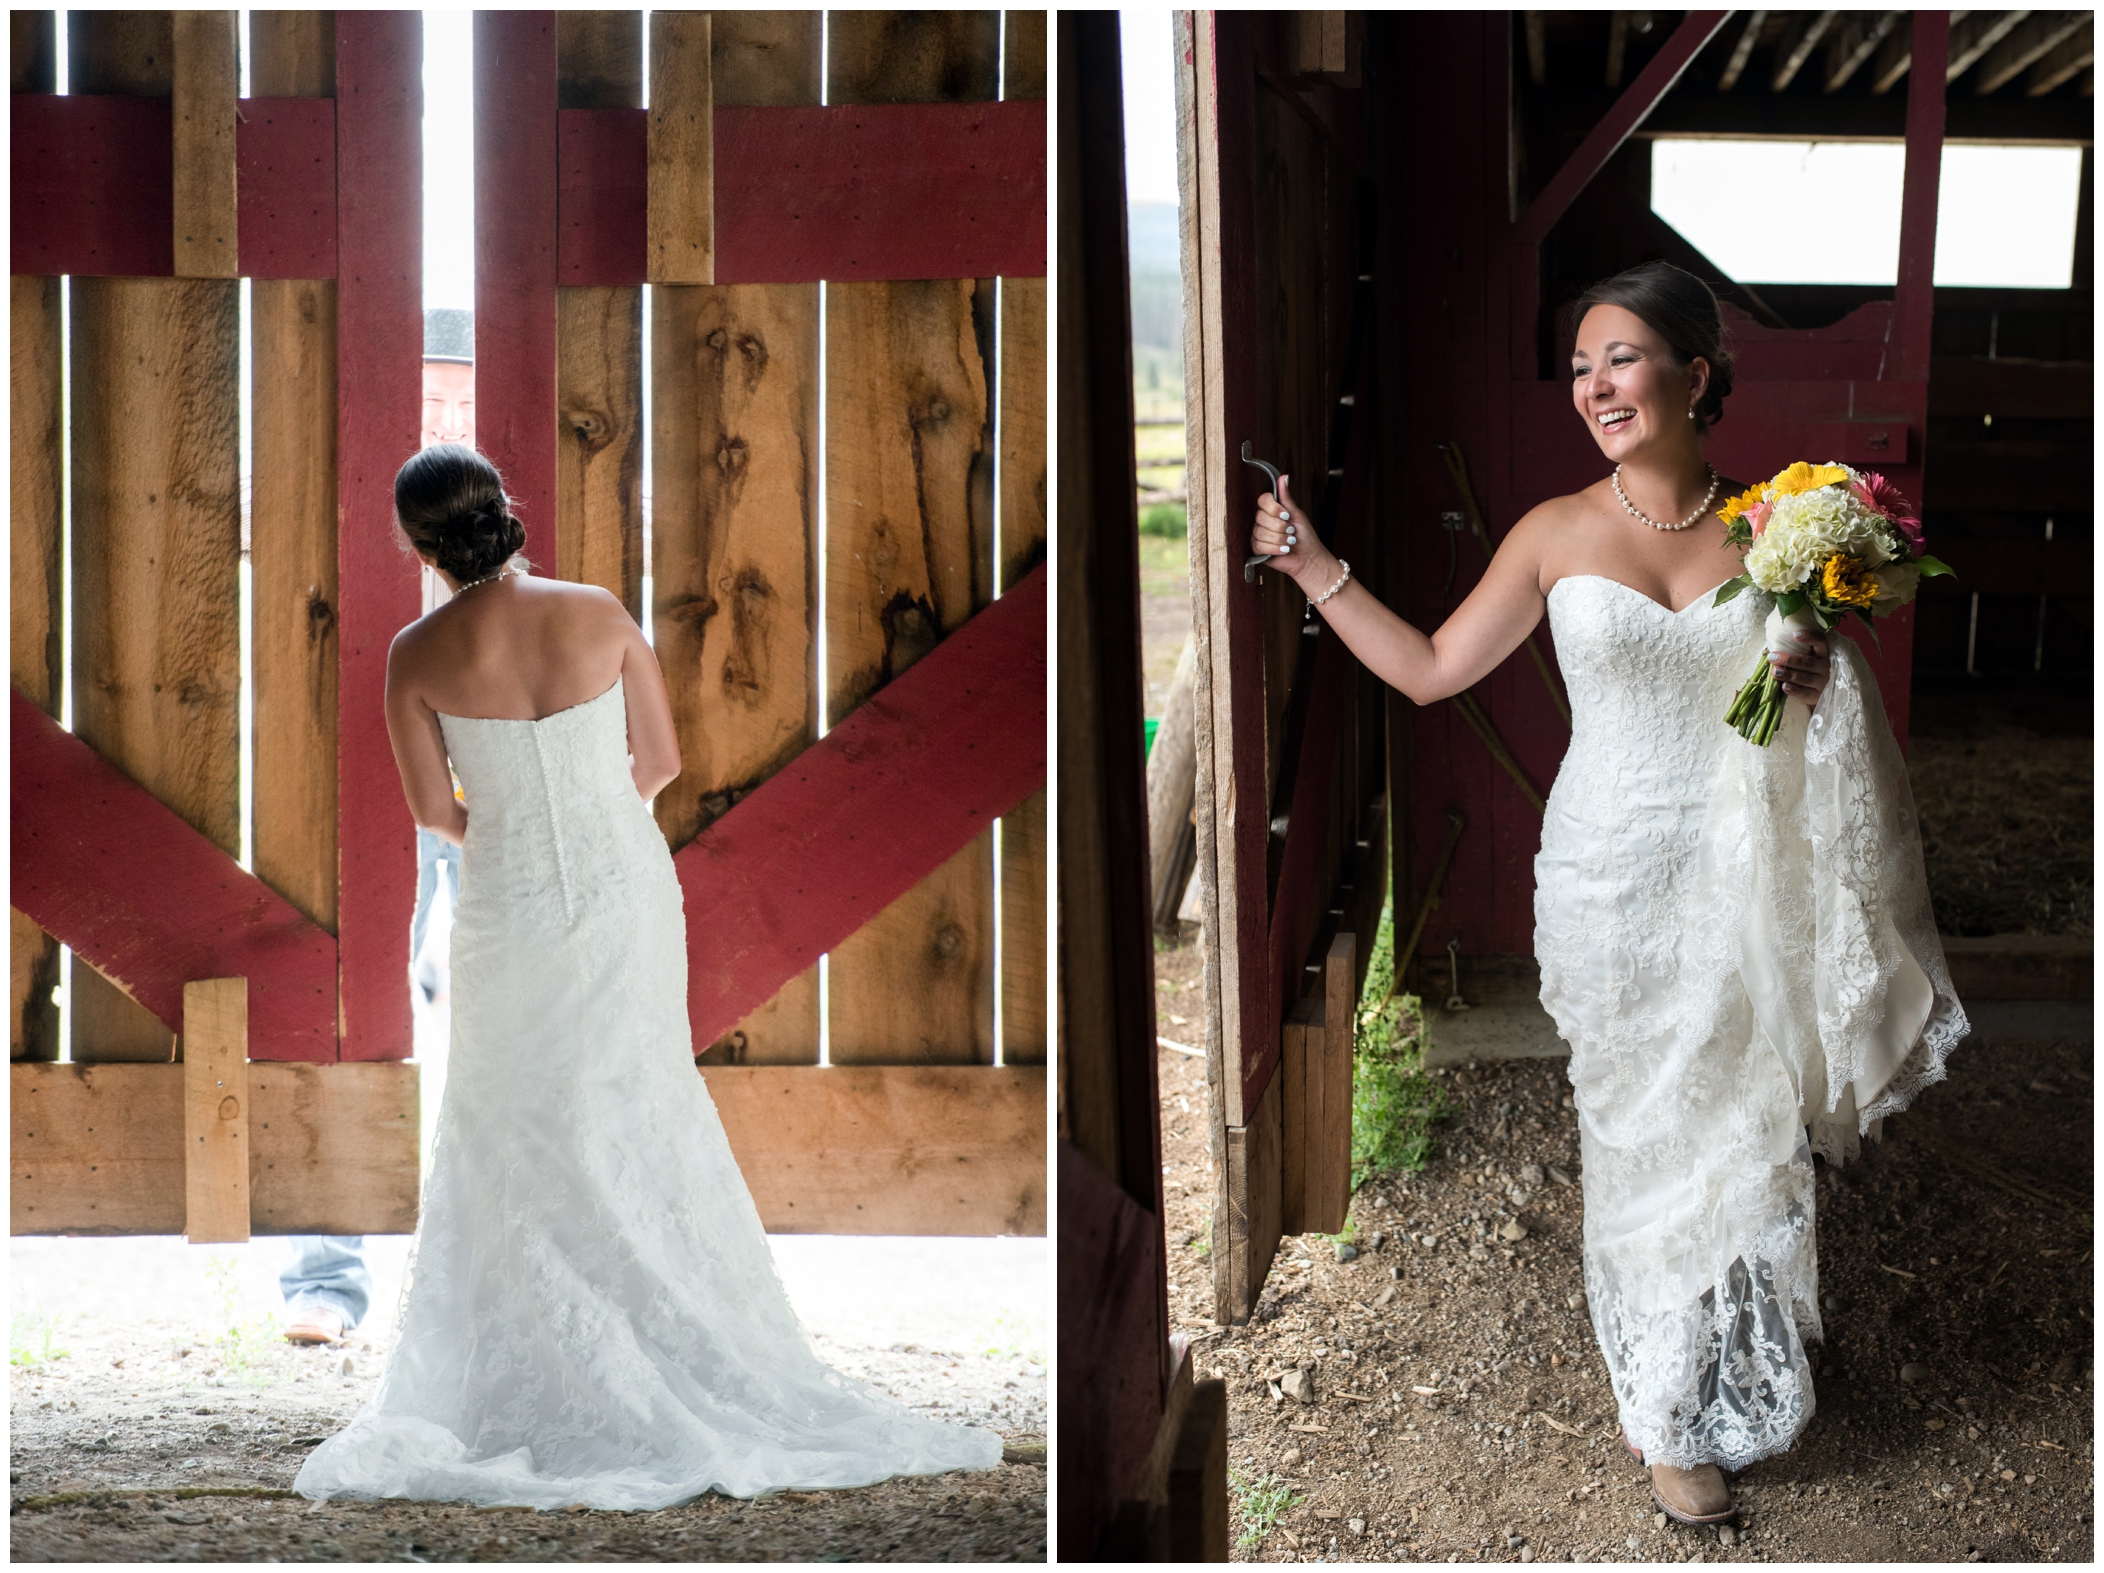 wedding first look in a barn 